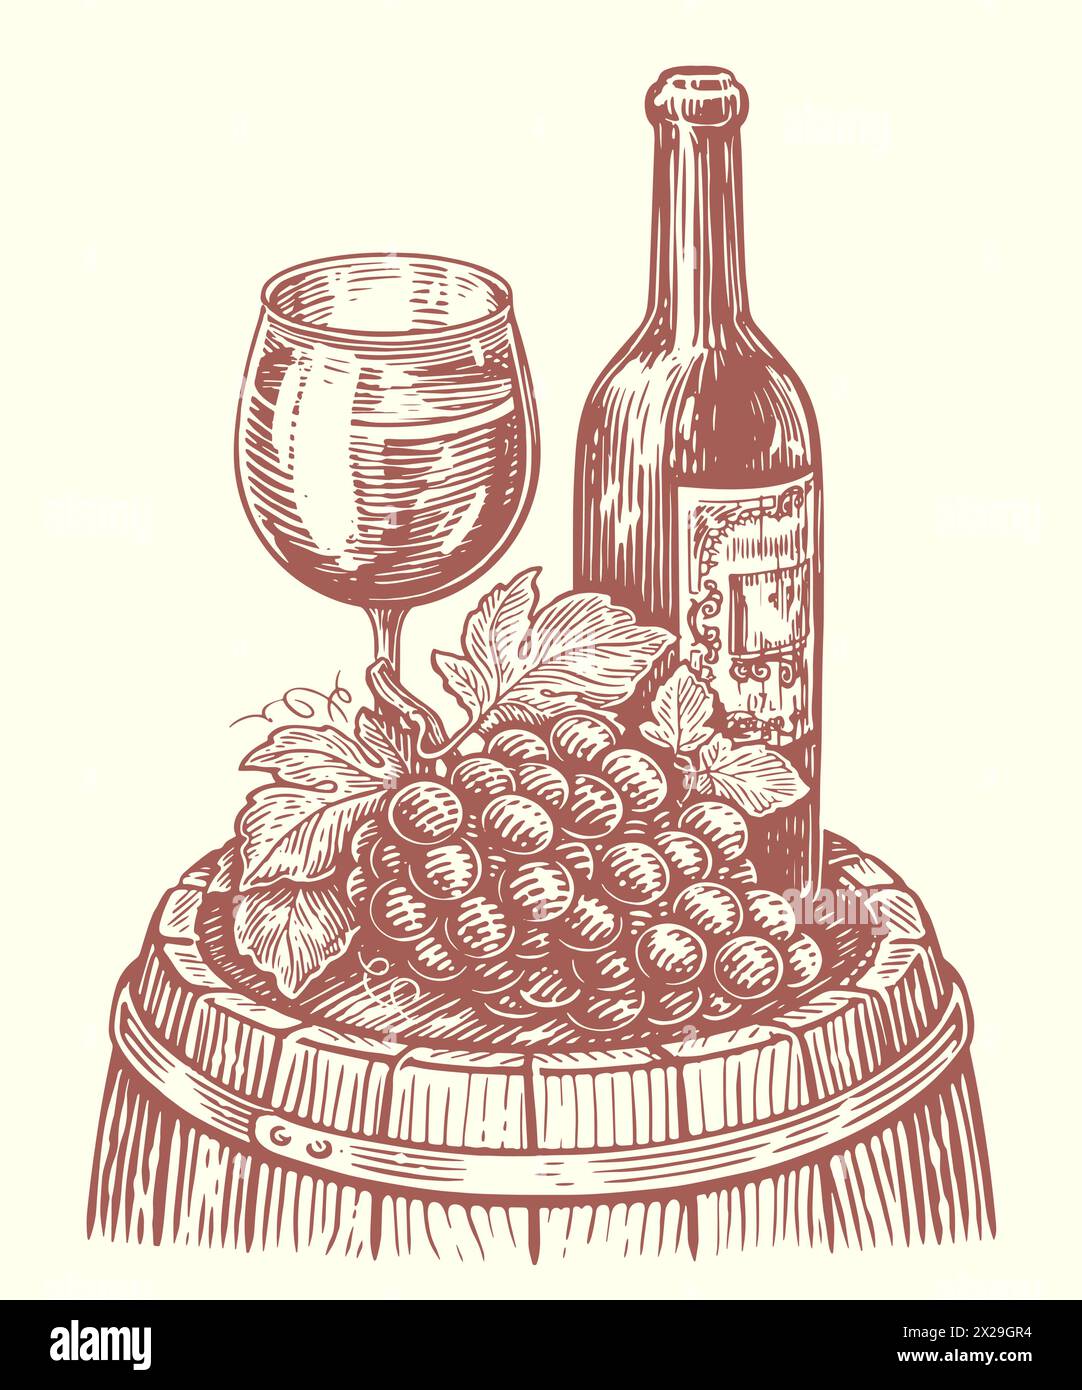 Wine bottle and wine glass on wooden barrel. Winery, vineyard sketch. Vintage vector illustration Stock Vector